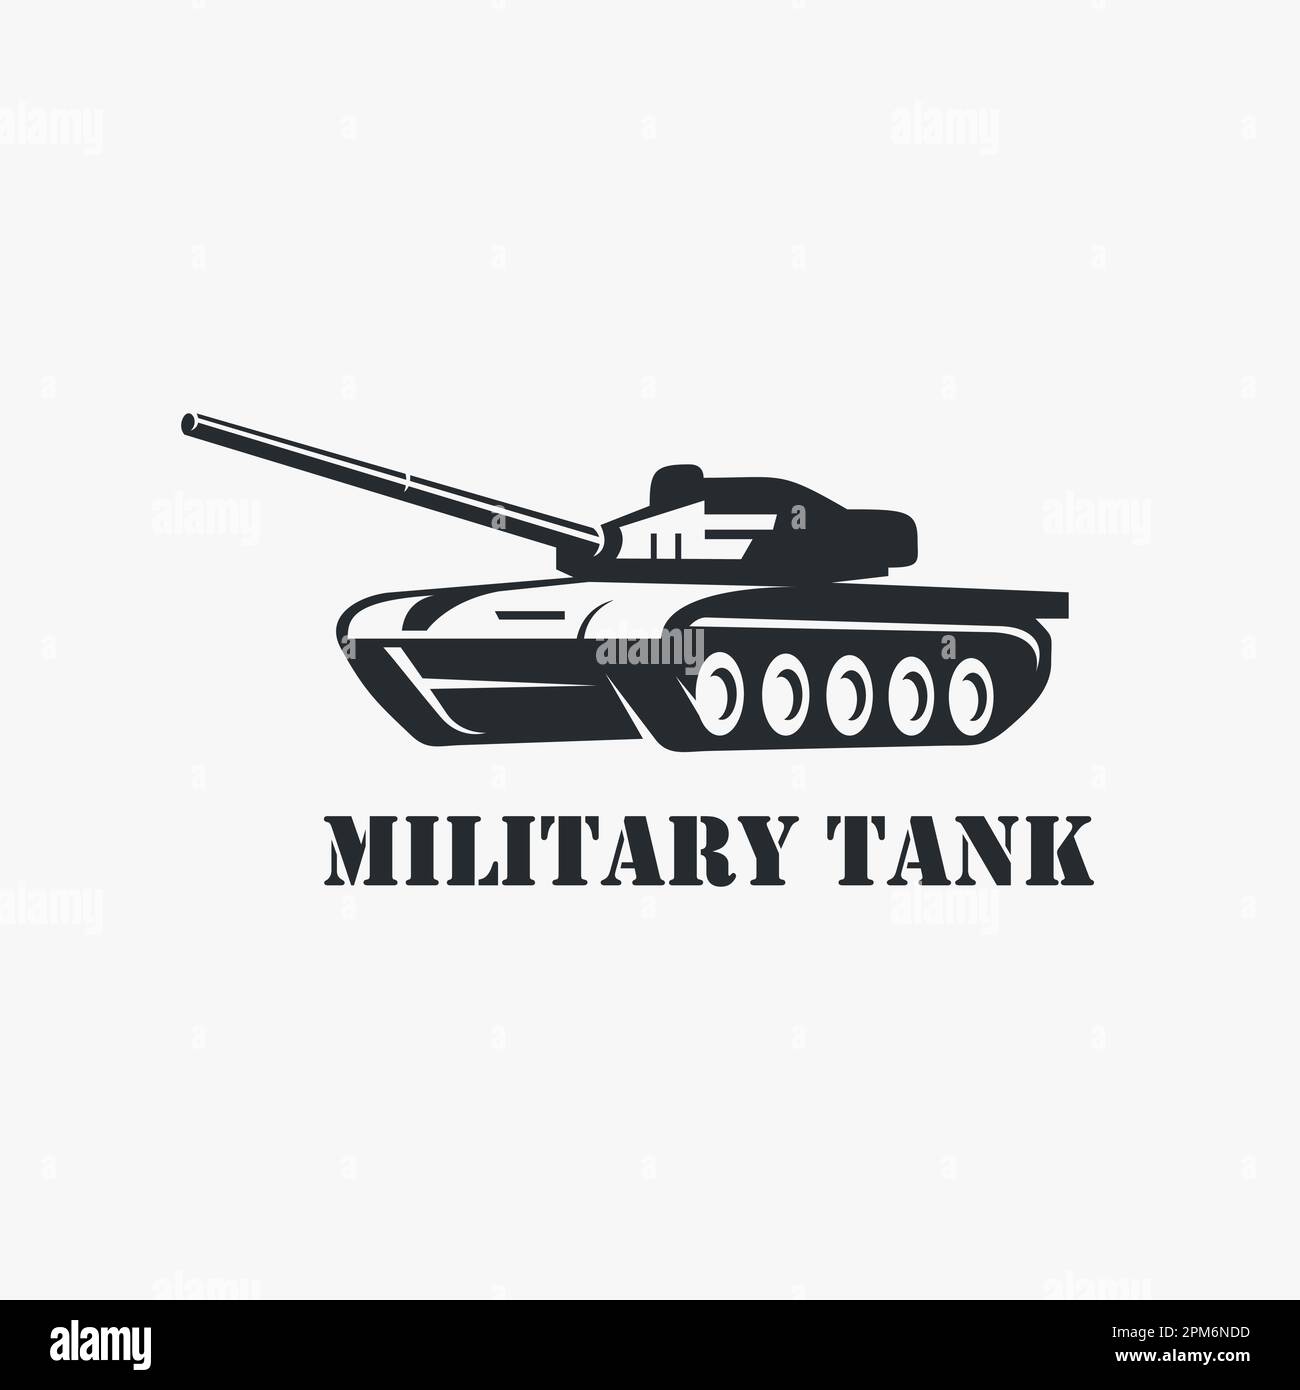 Military tank logo design Stock Vector